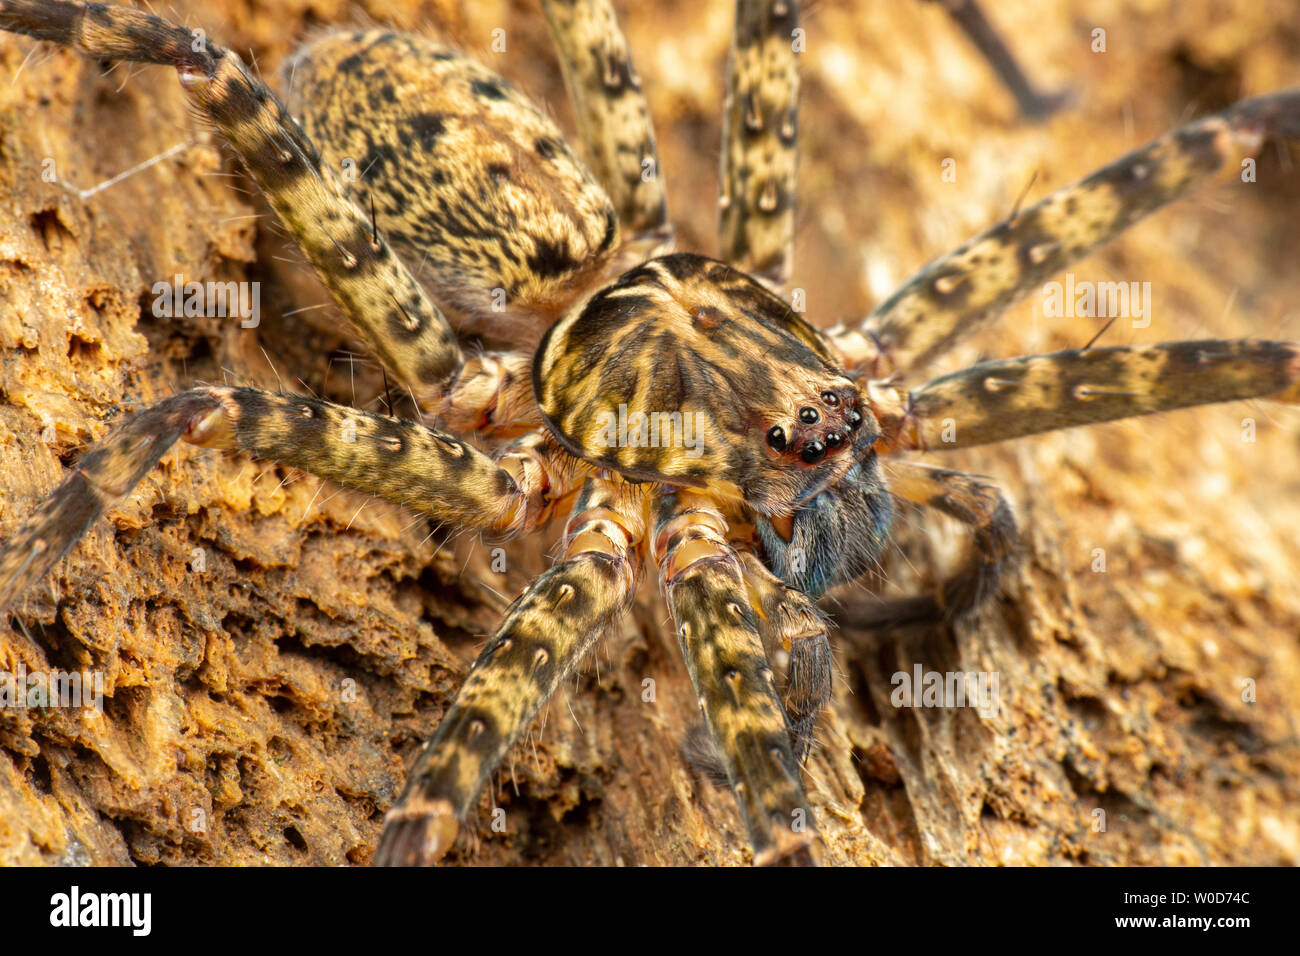 Huntsman spider, Sparrasidae, Heteropoda, foraging in rainforest at night Stock Photo